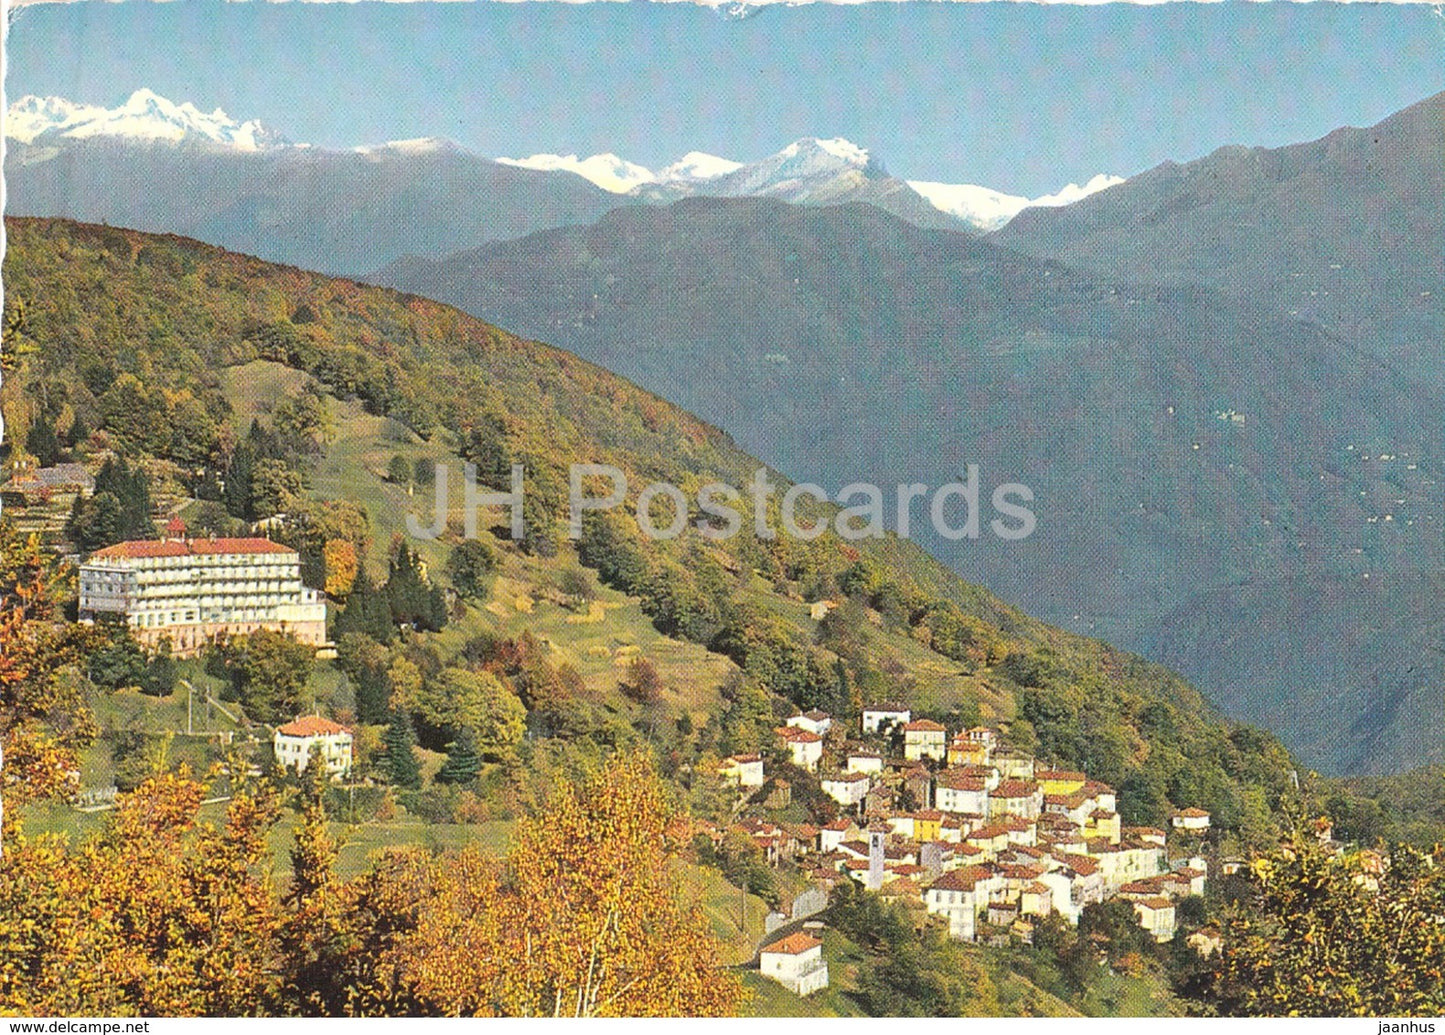 Cademario TI - 5892 - 1972 - Switzerland - used - JH Postcards